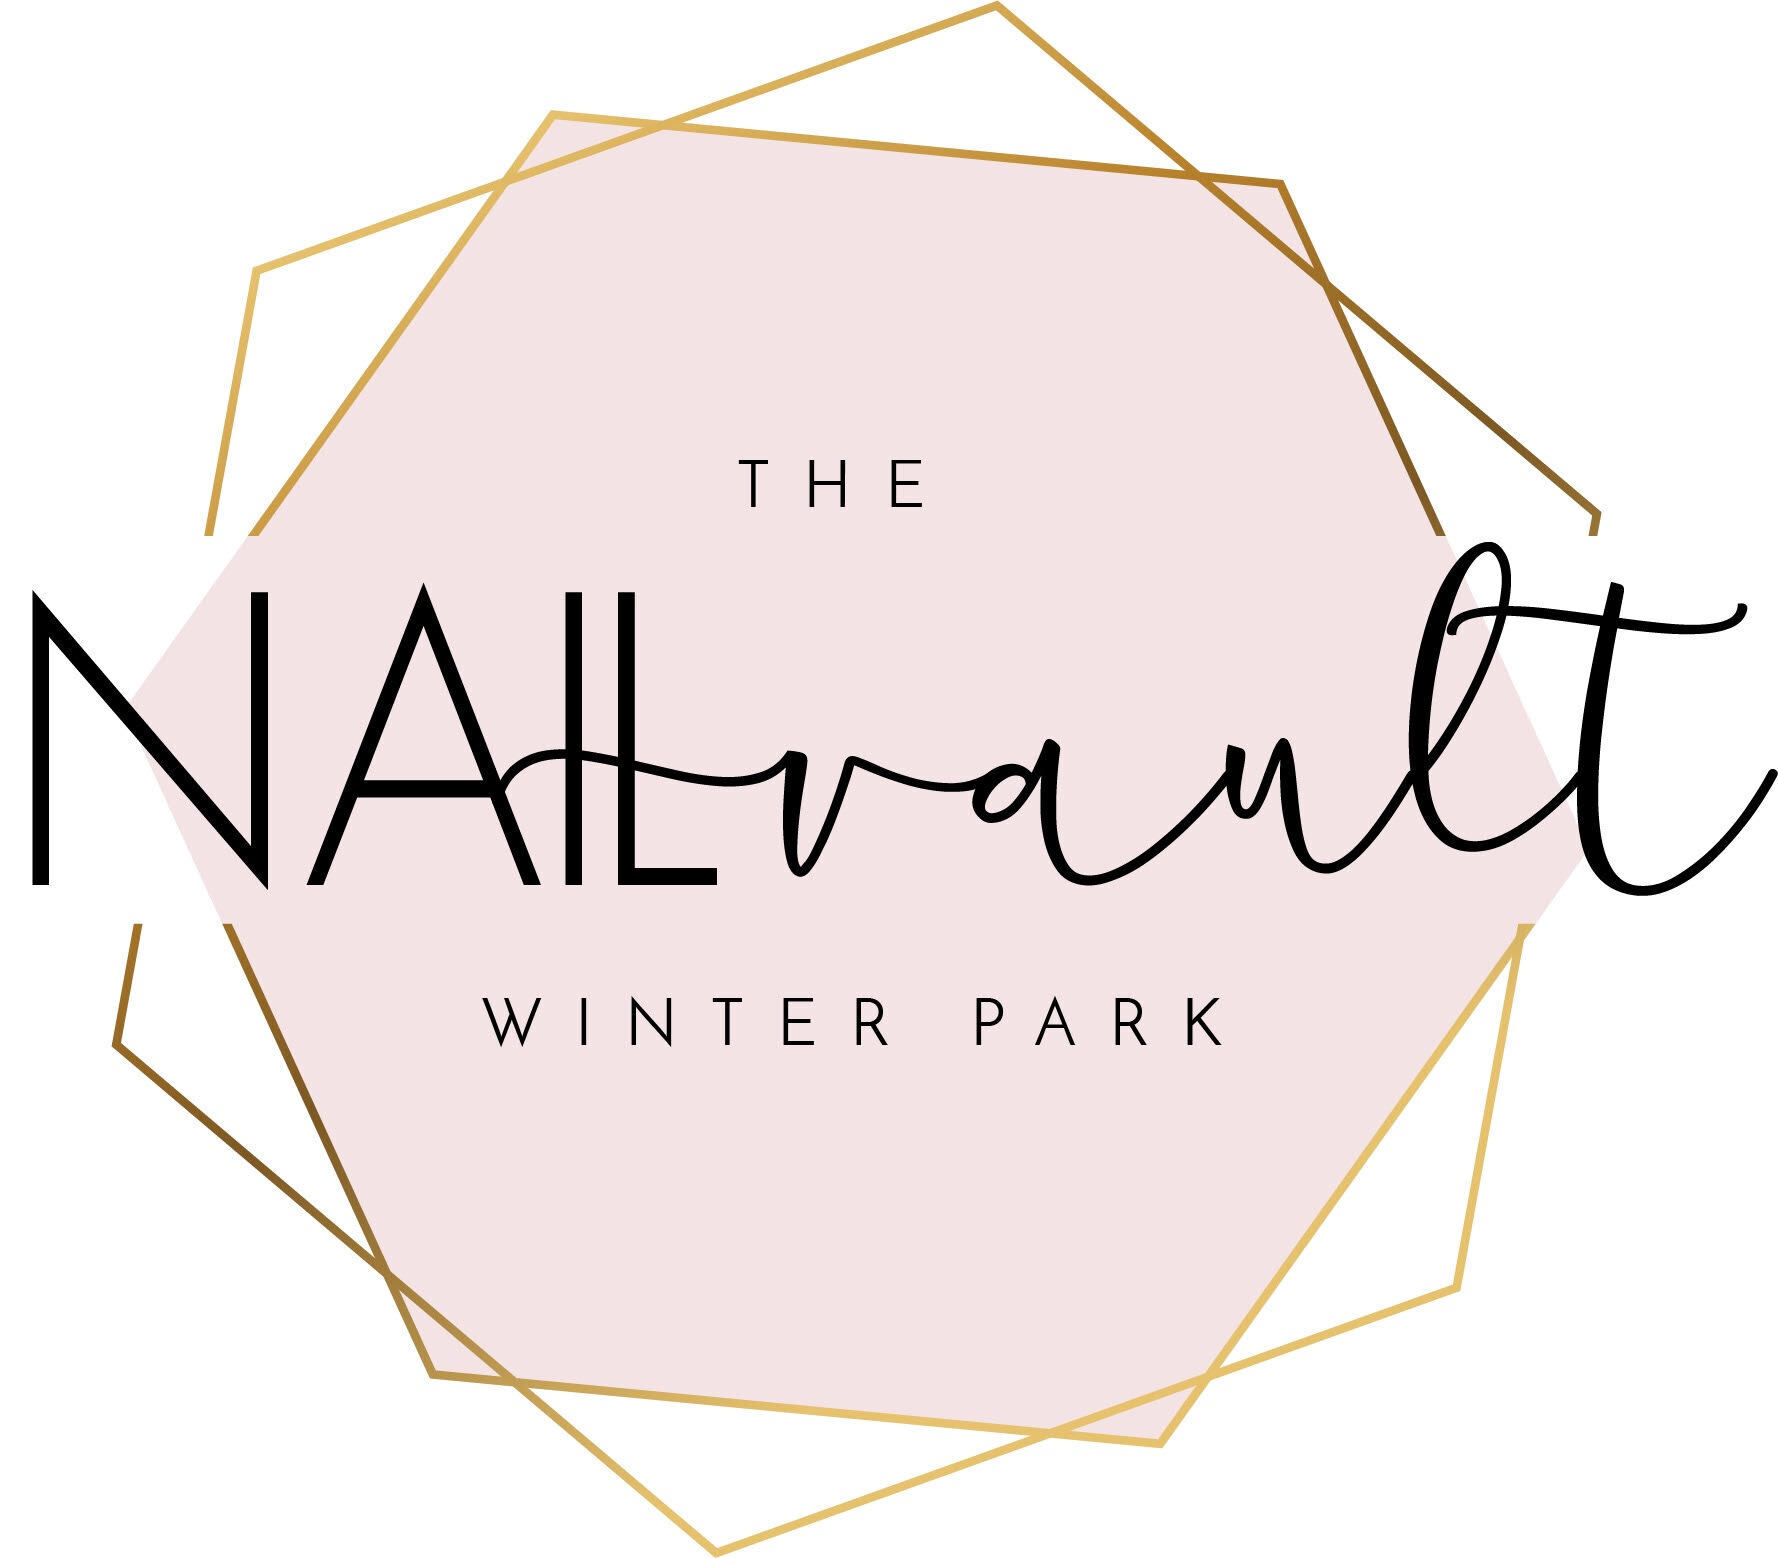 The Nail Vault Winter Park